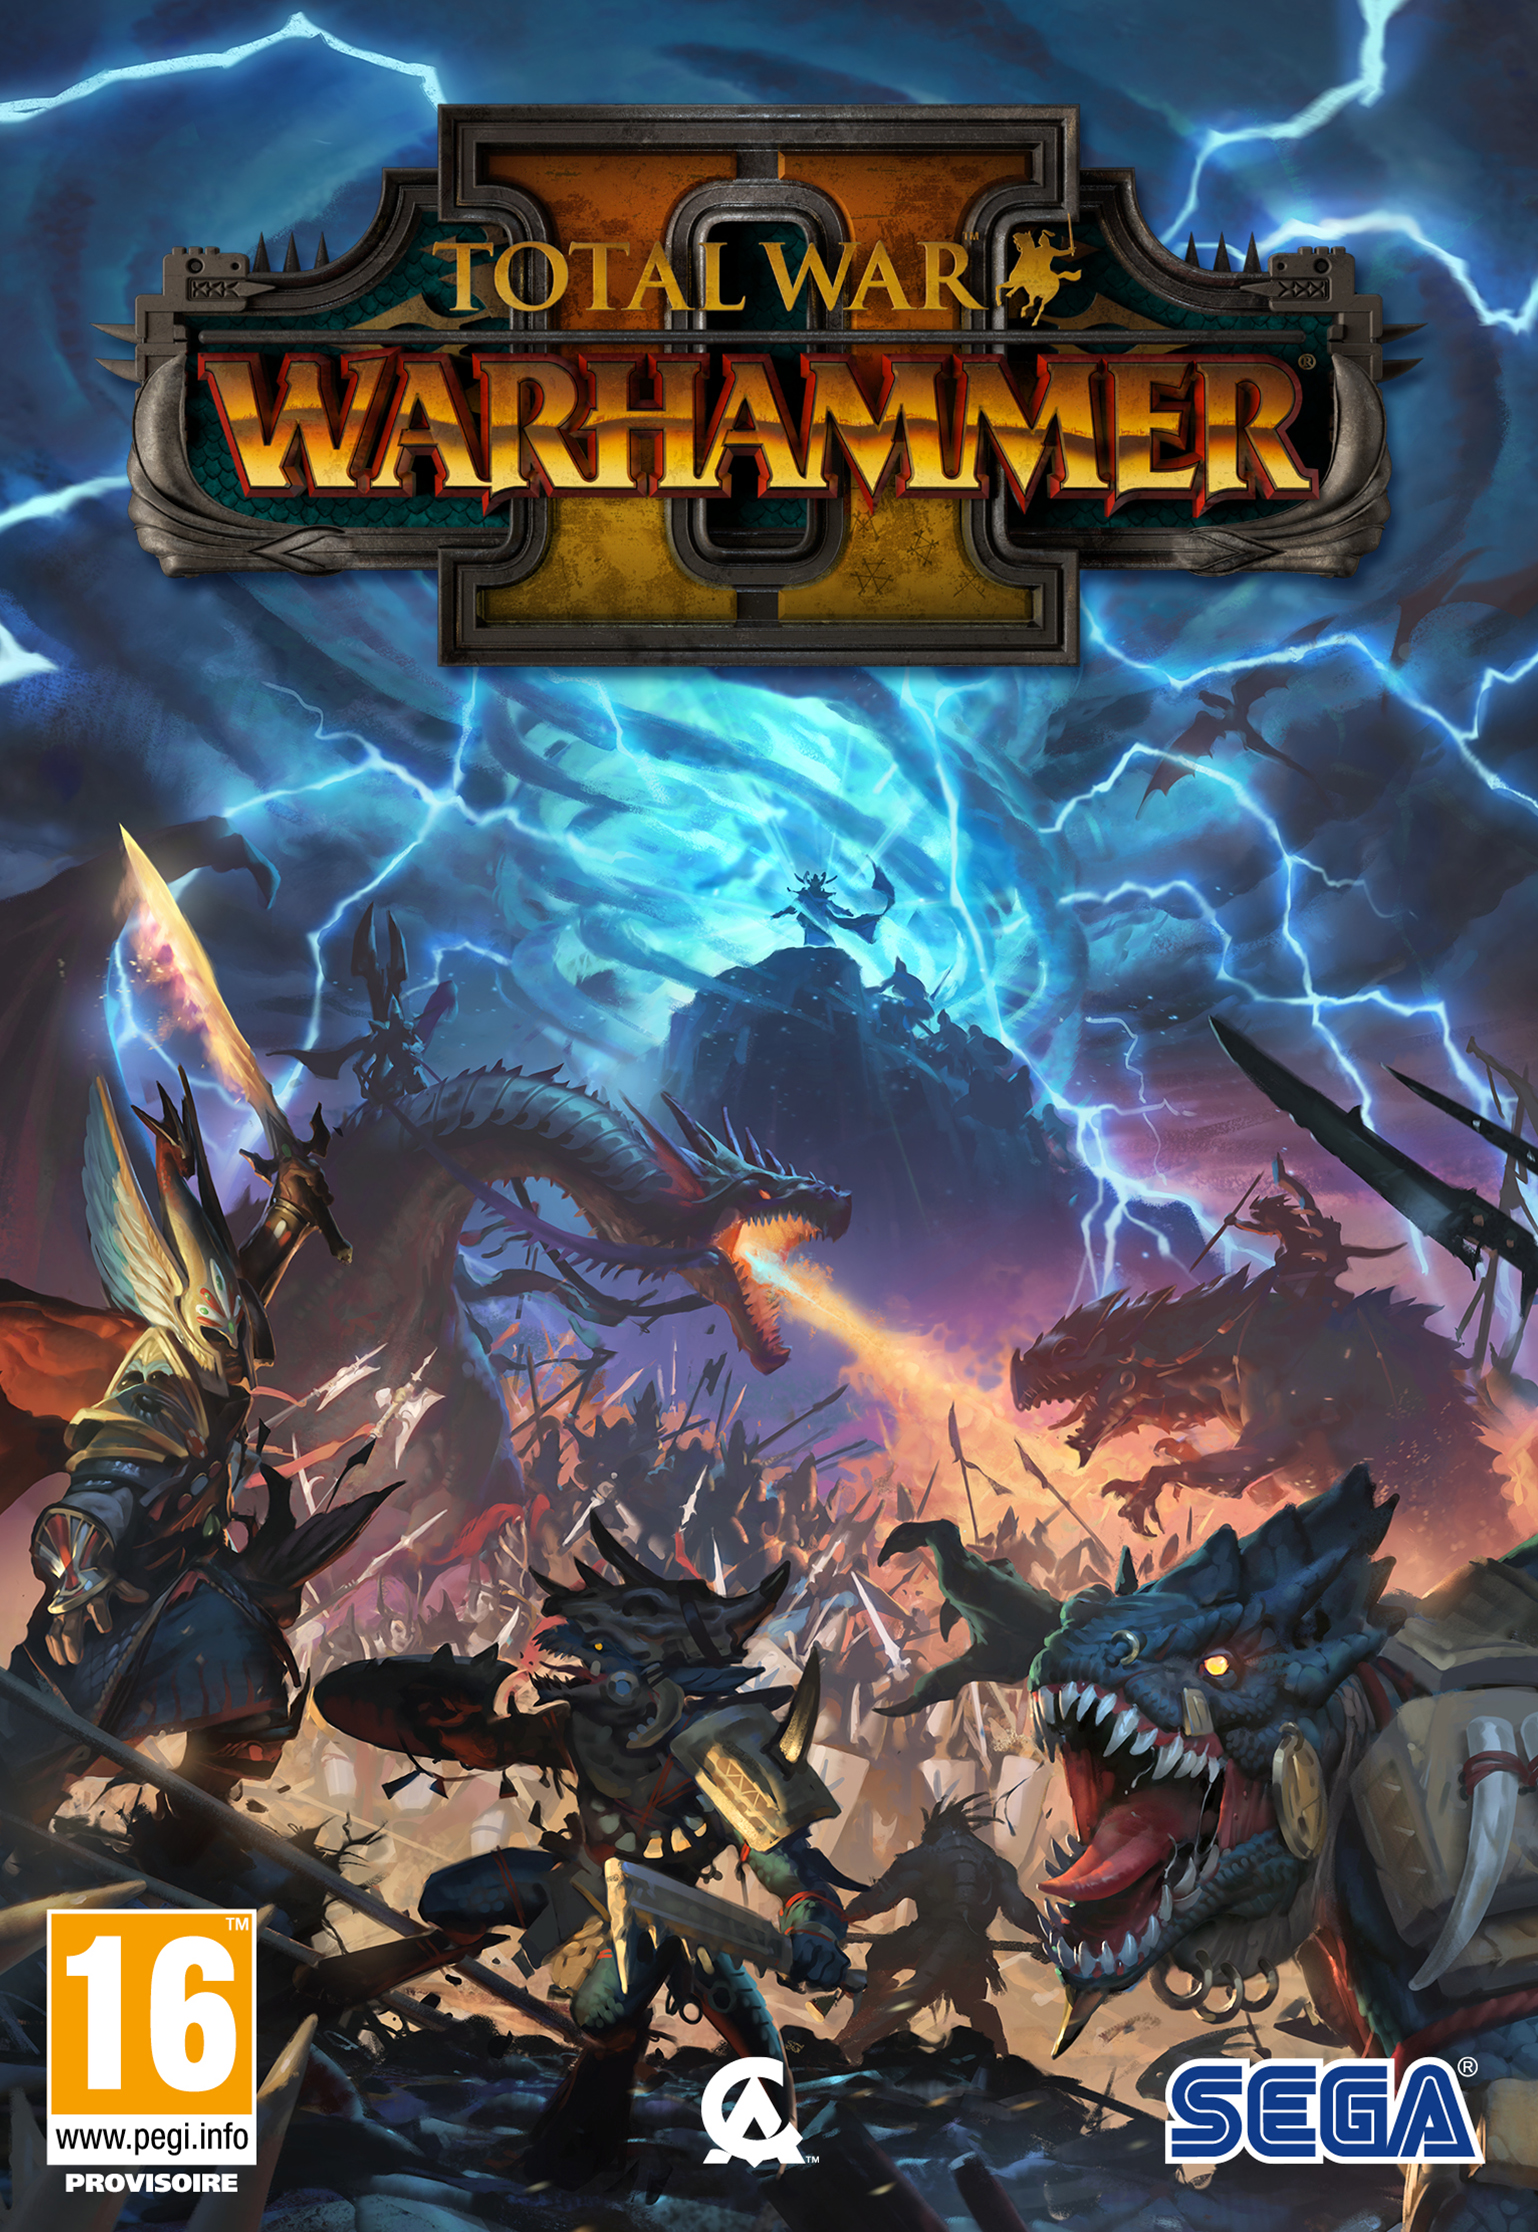 jaquette reduite de Total War: Warhammer II sur PC